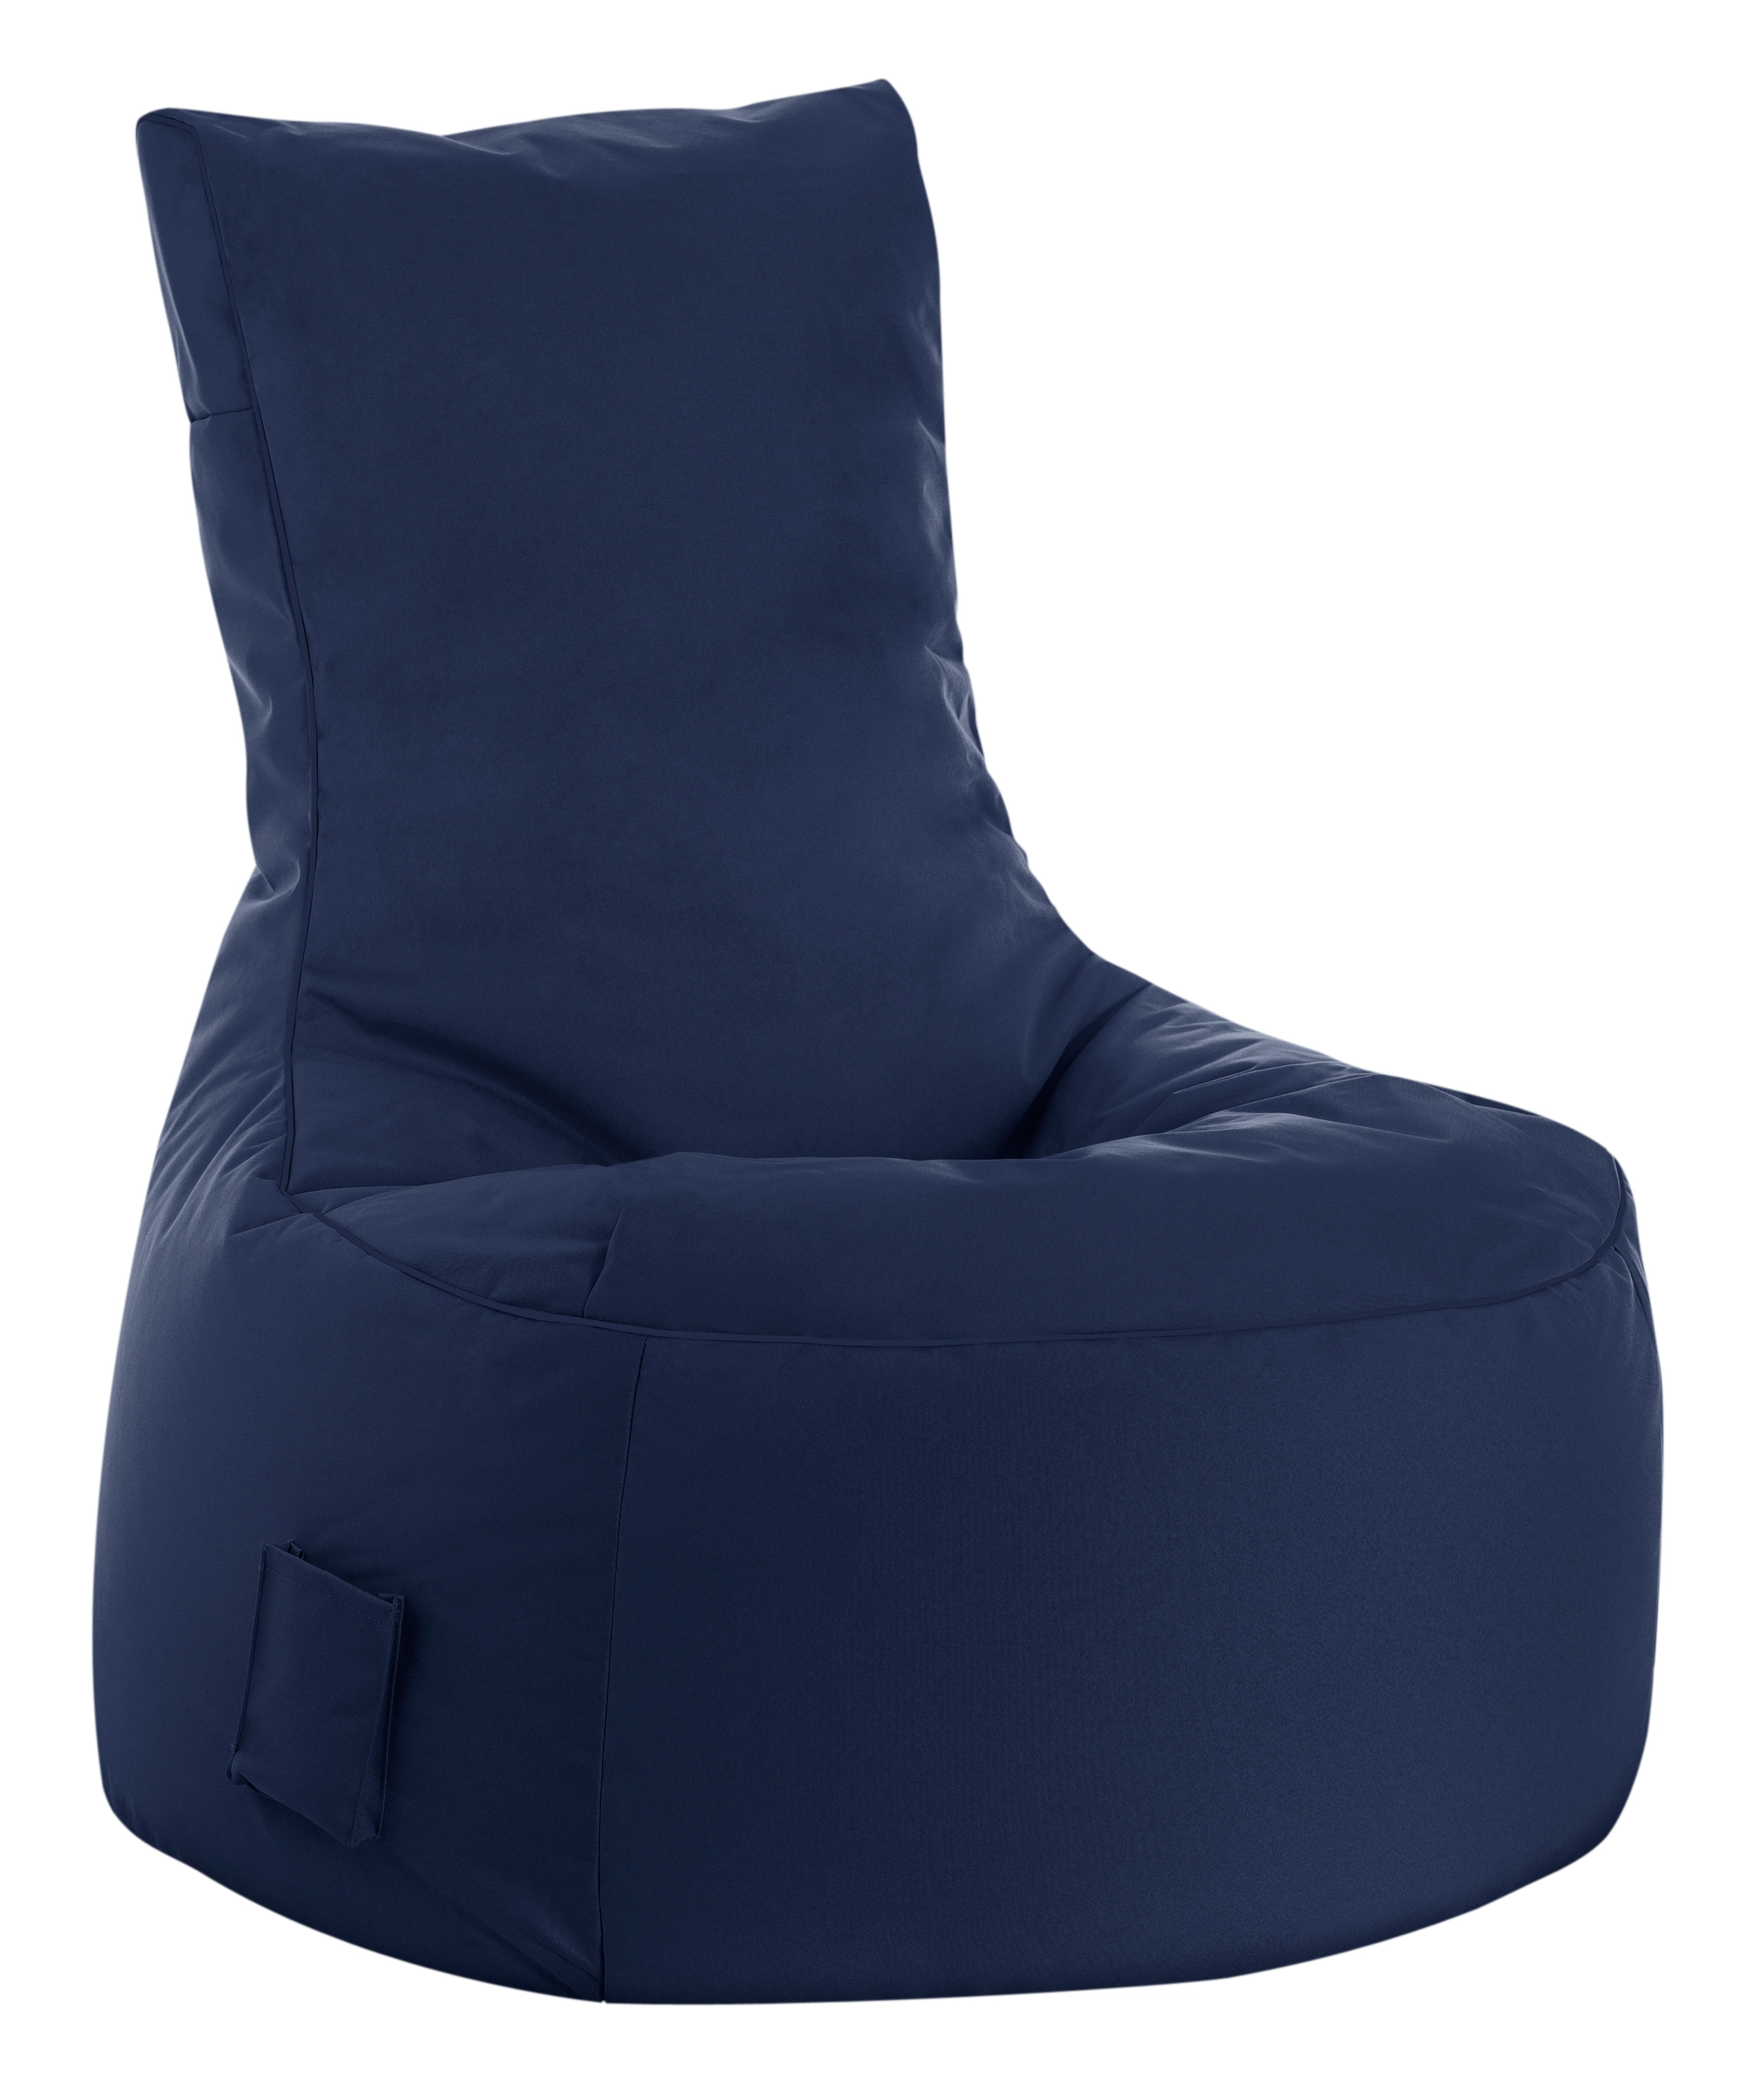 Sitting Point Sitzsack Swing Scuba OBI kaufen bei Jeansblau 300 l